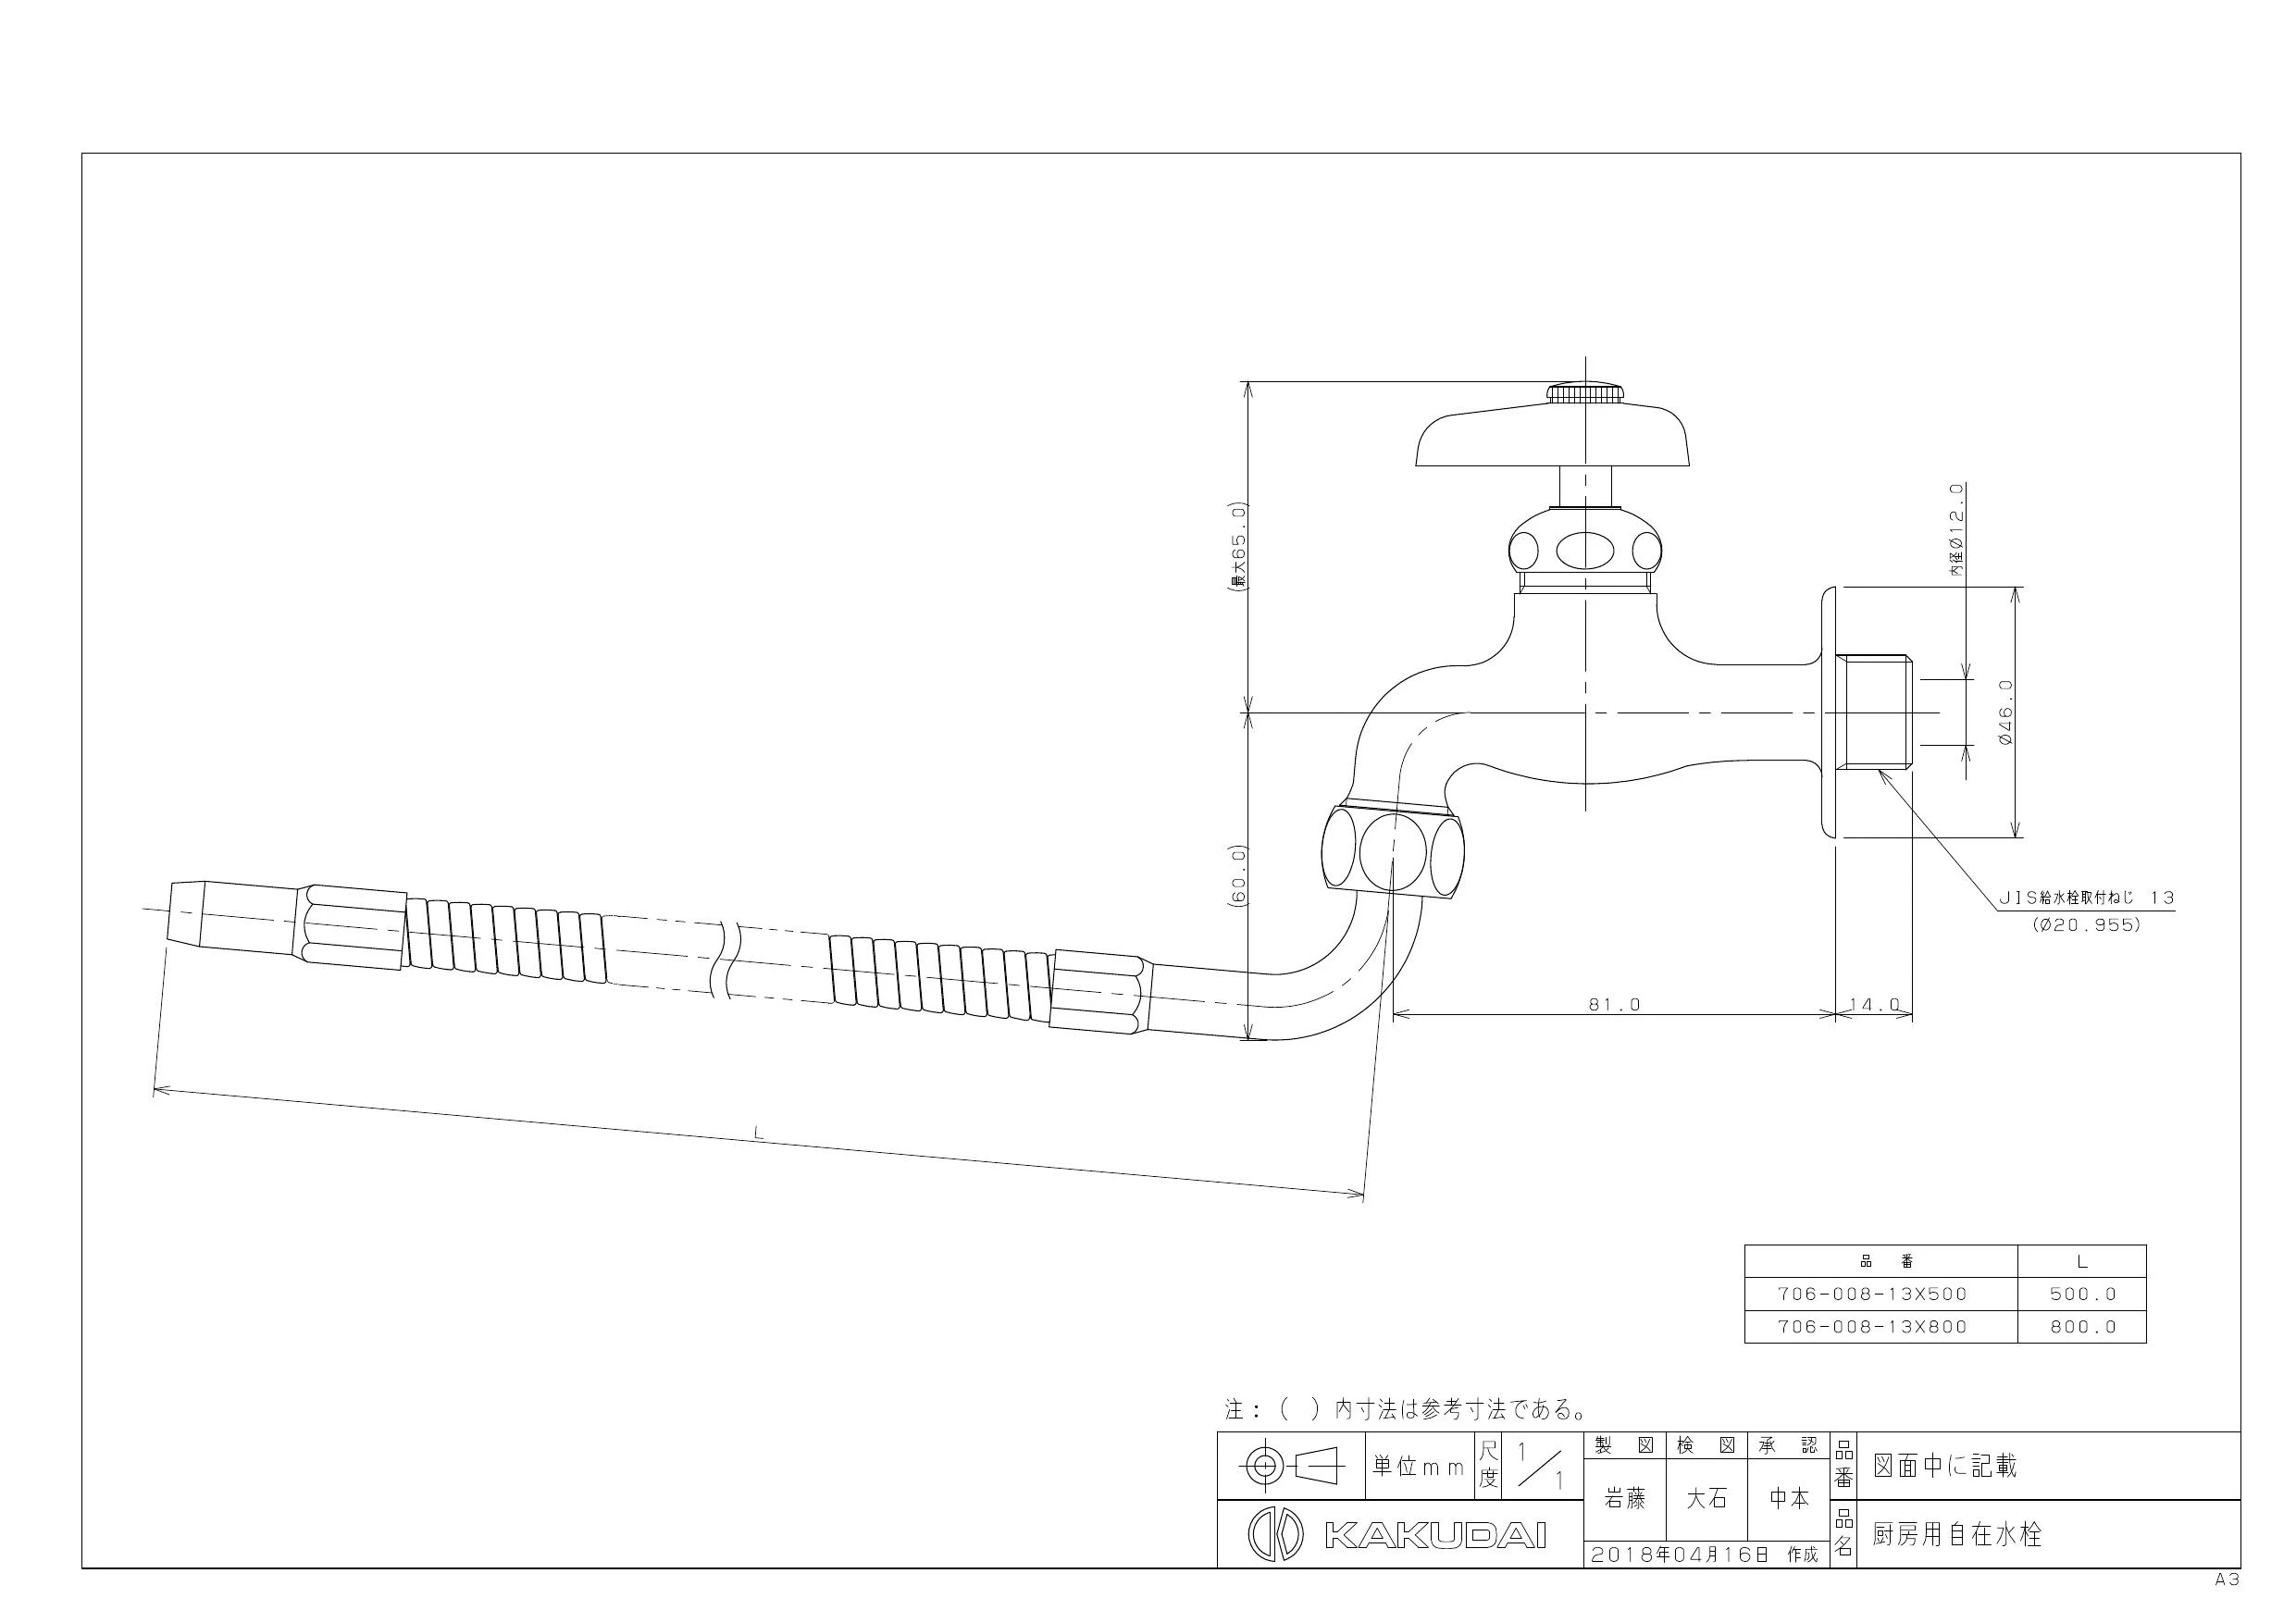 706-008-13X800 商品図面|カクダイ 特殊水栓の通販はプロストア ダイレクト